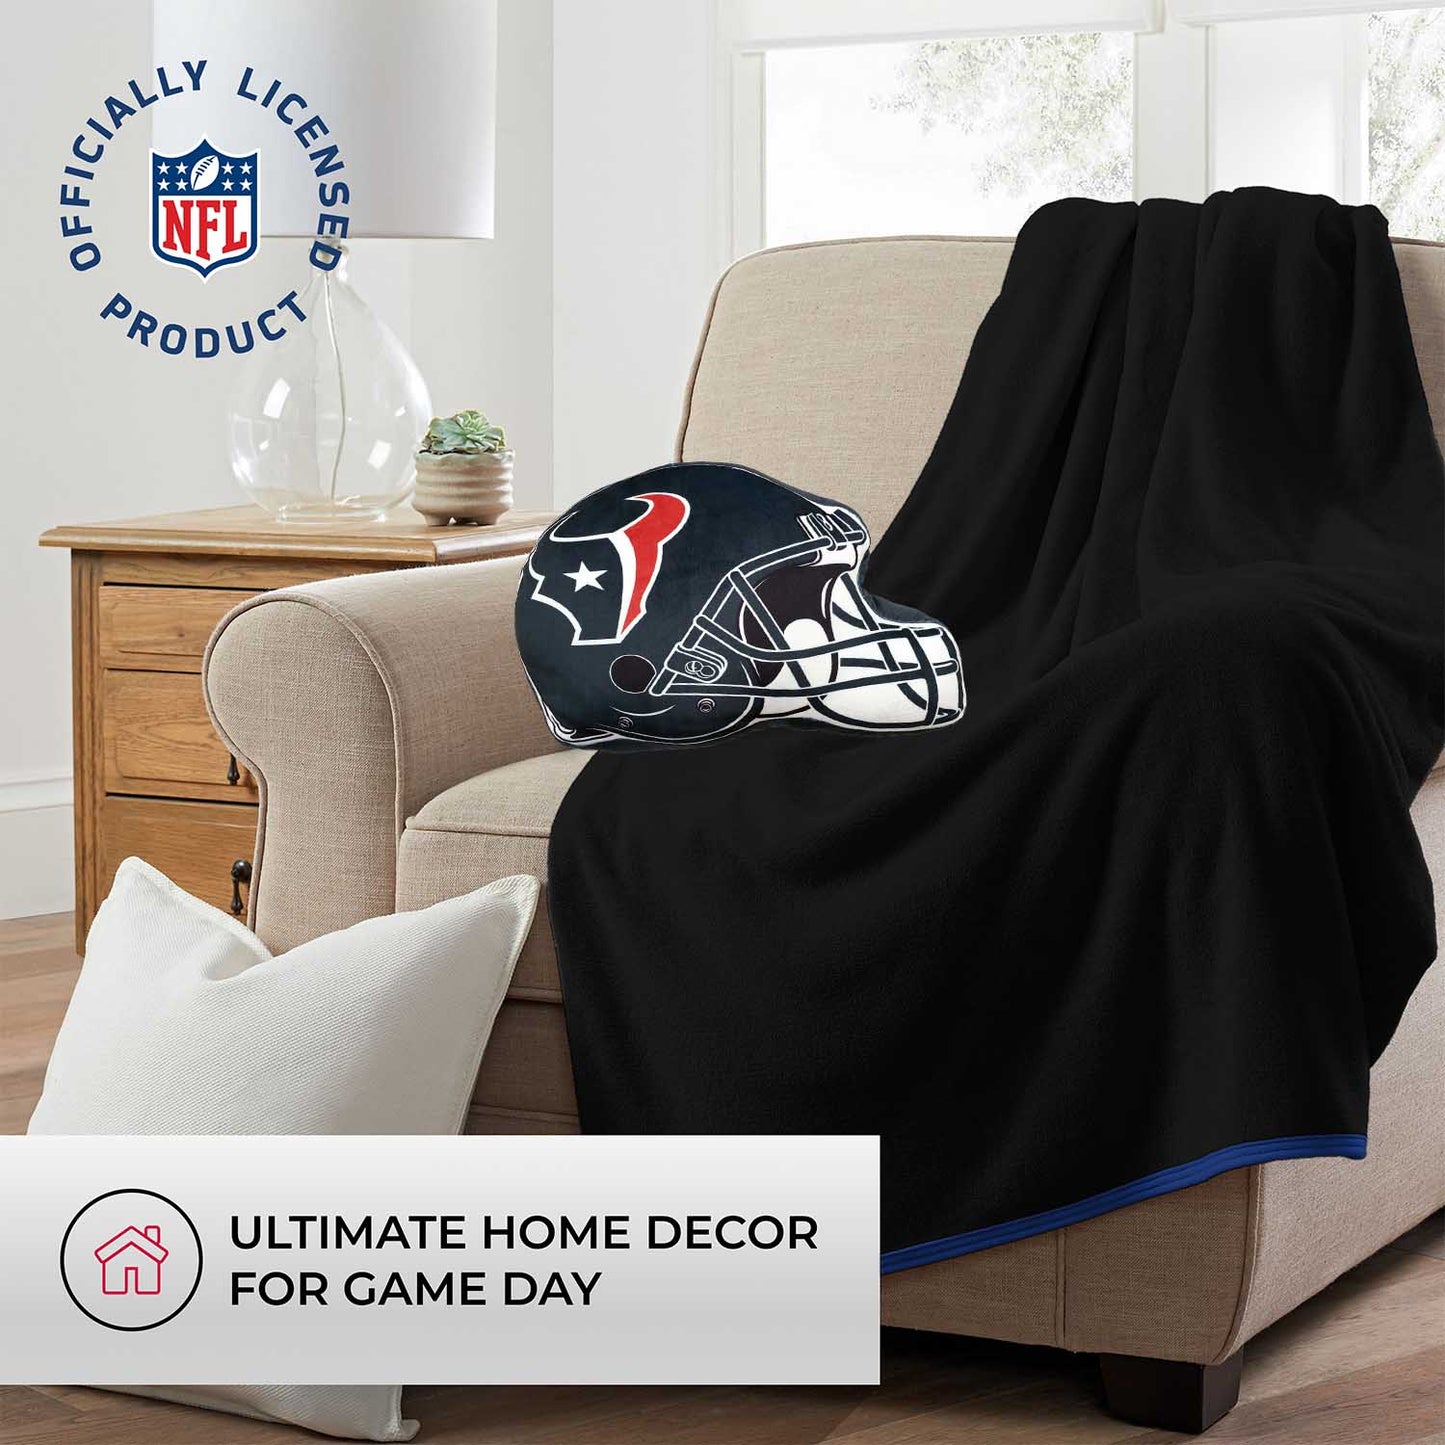 Houston Texans NFL Helmet Football Super Soft Plush Pillow - Navy